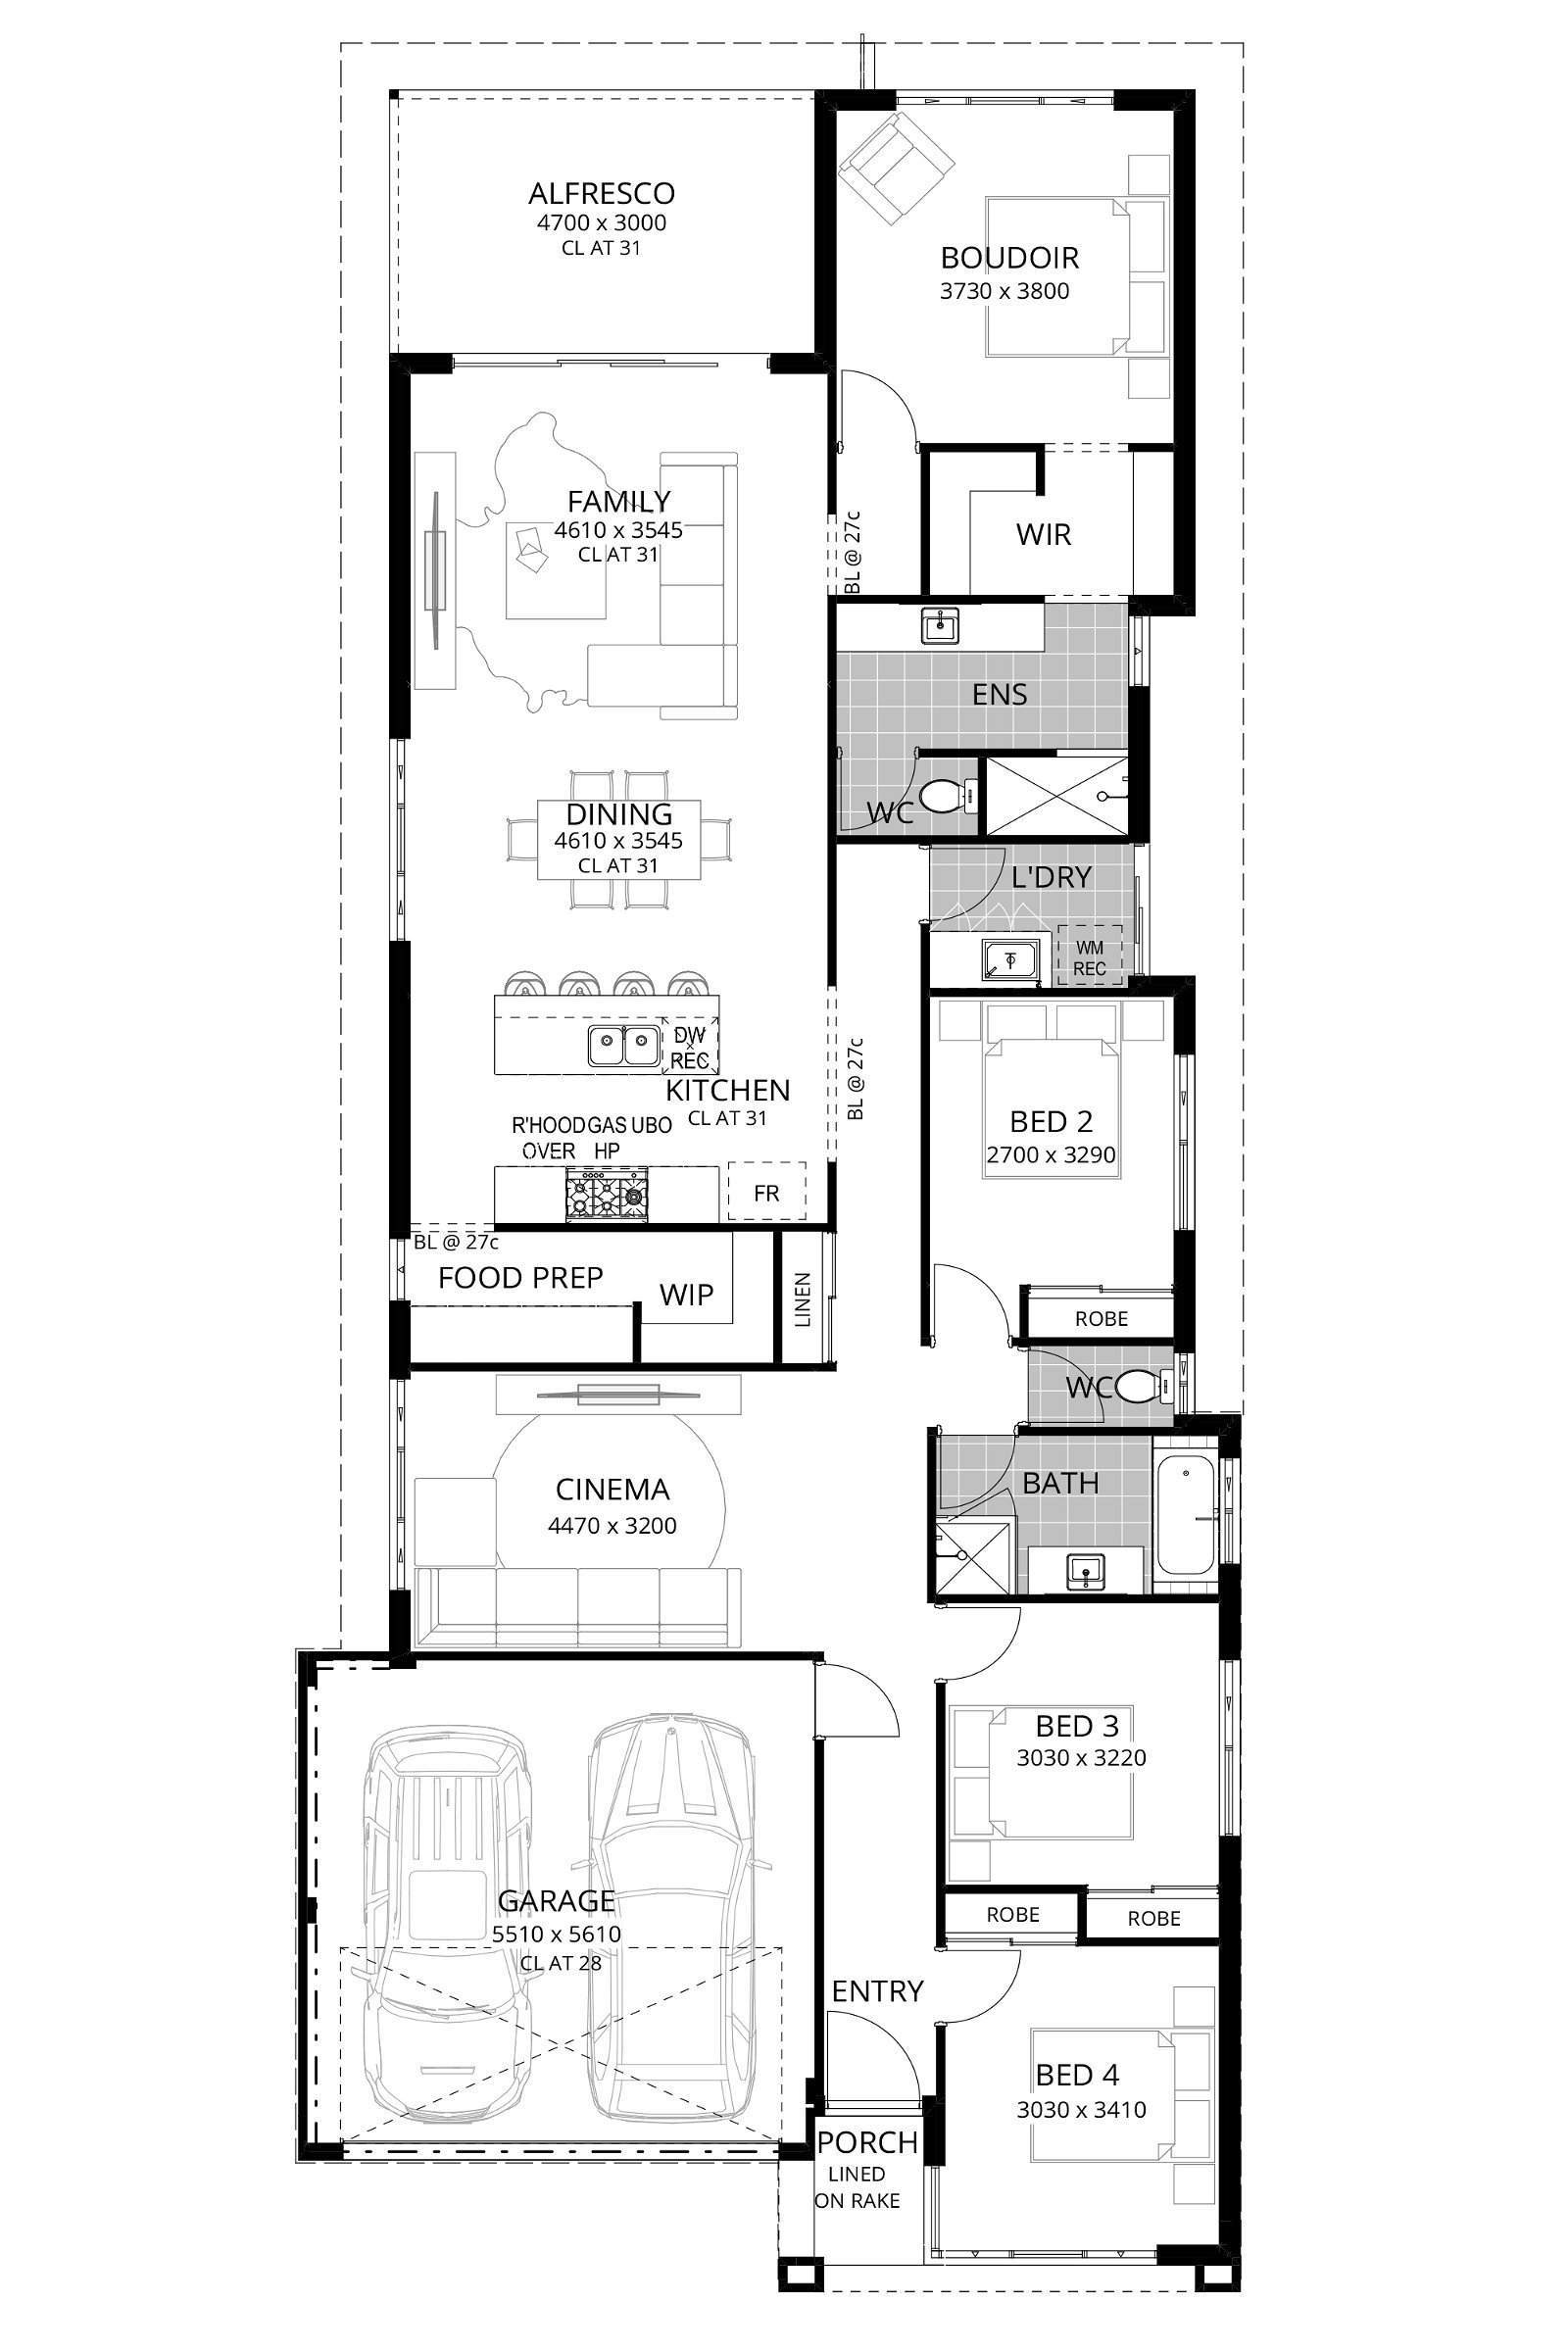 Residential Attitudes - Skinny Latte - Floorplan - Skinny Latte Website Floorplan